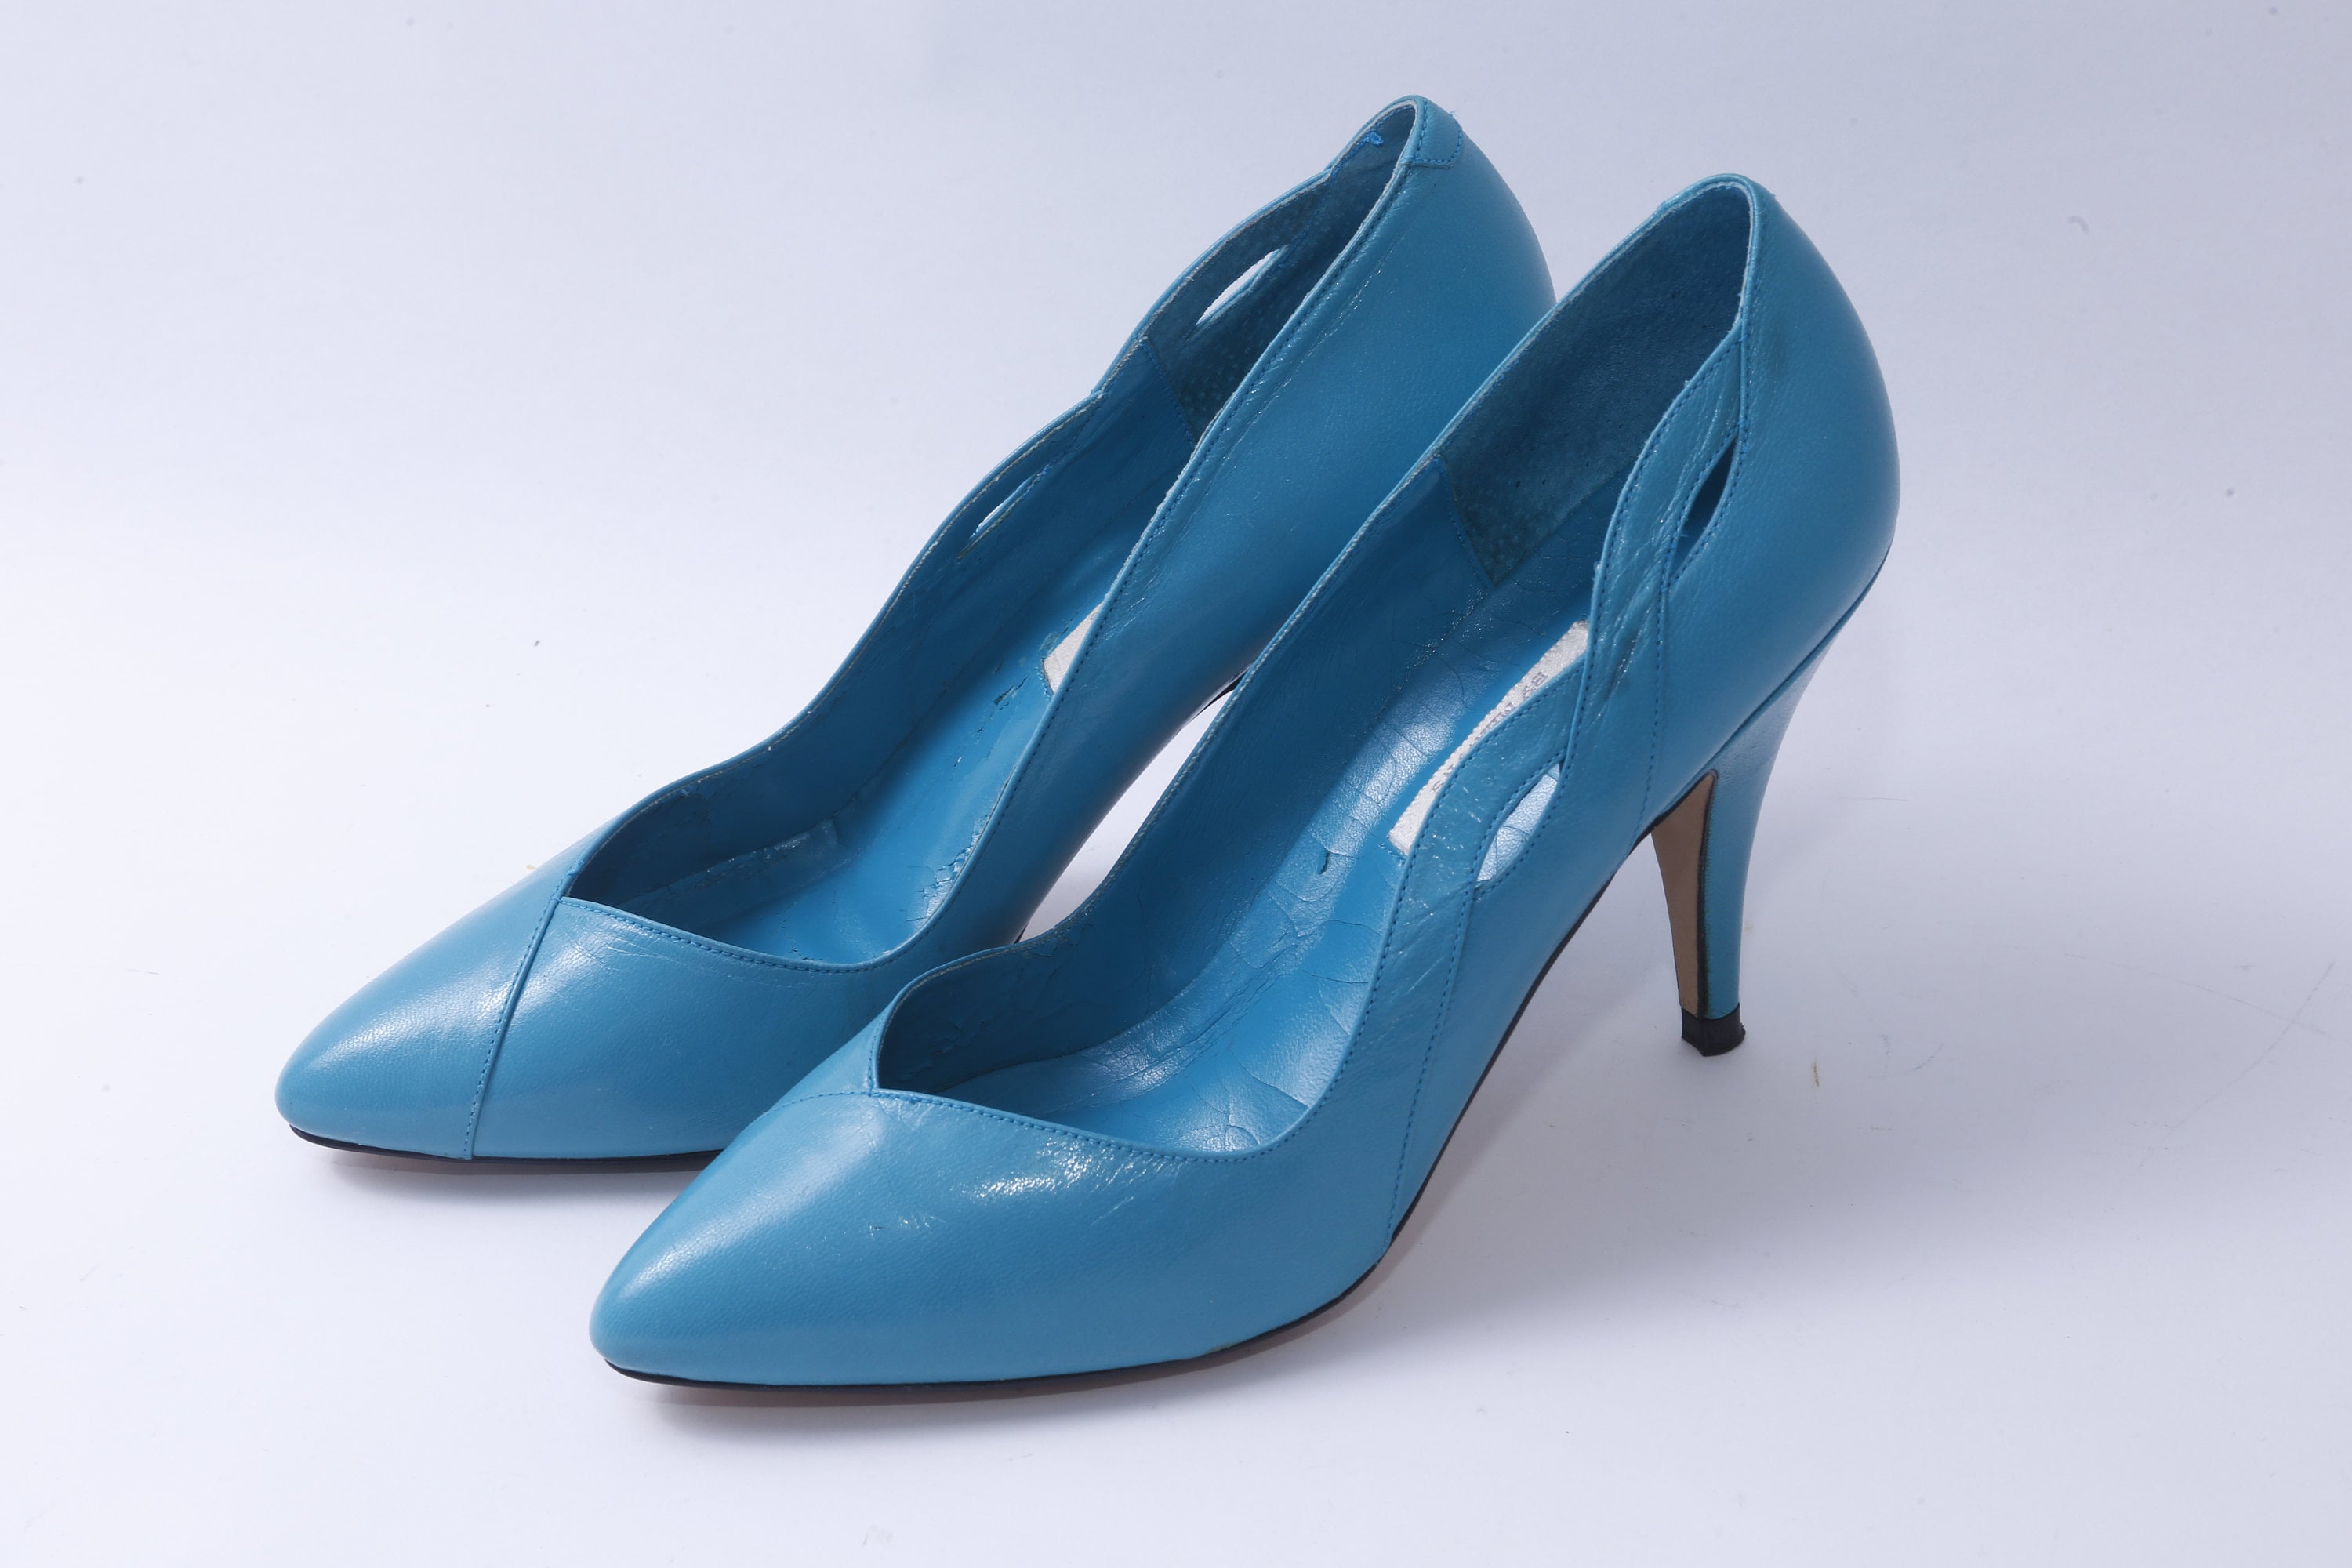 Blue, Heels, Pumps, High Heels, Women's Shoes, Size 5.5 B